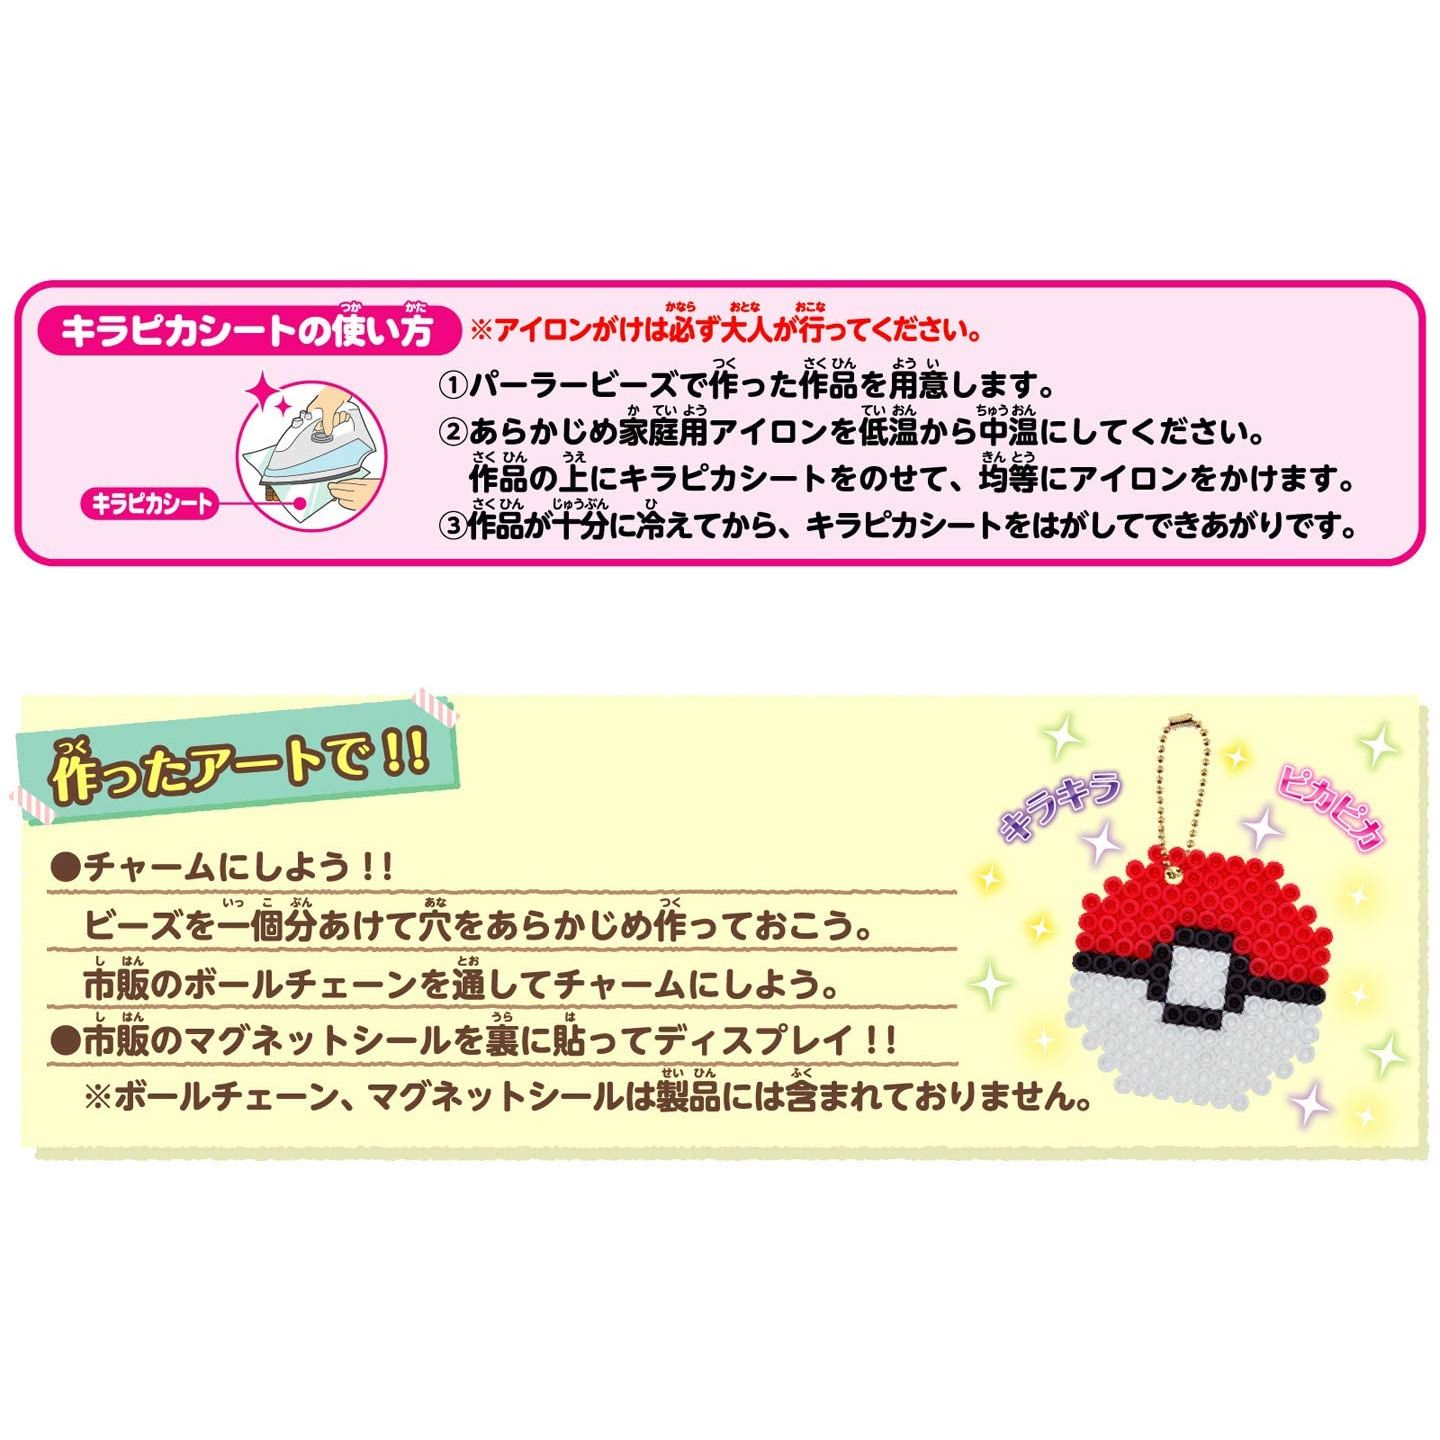 Kawada - Aquabeads Pokemon - KuraPika Set - , import Japon